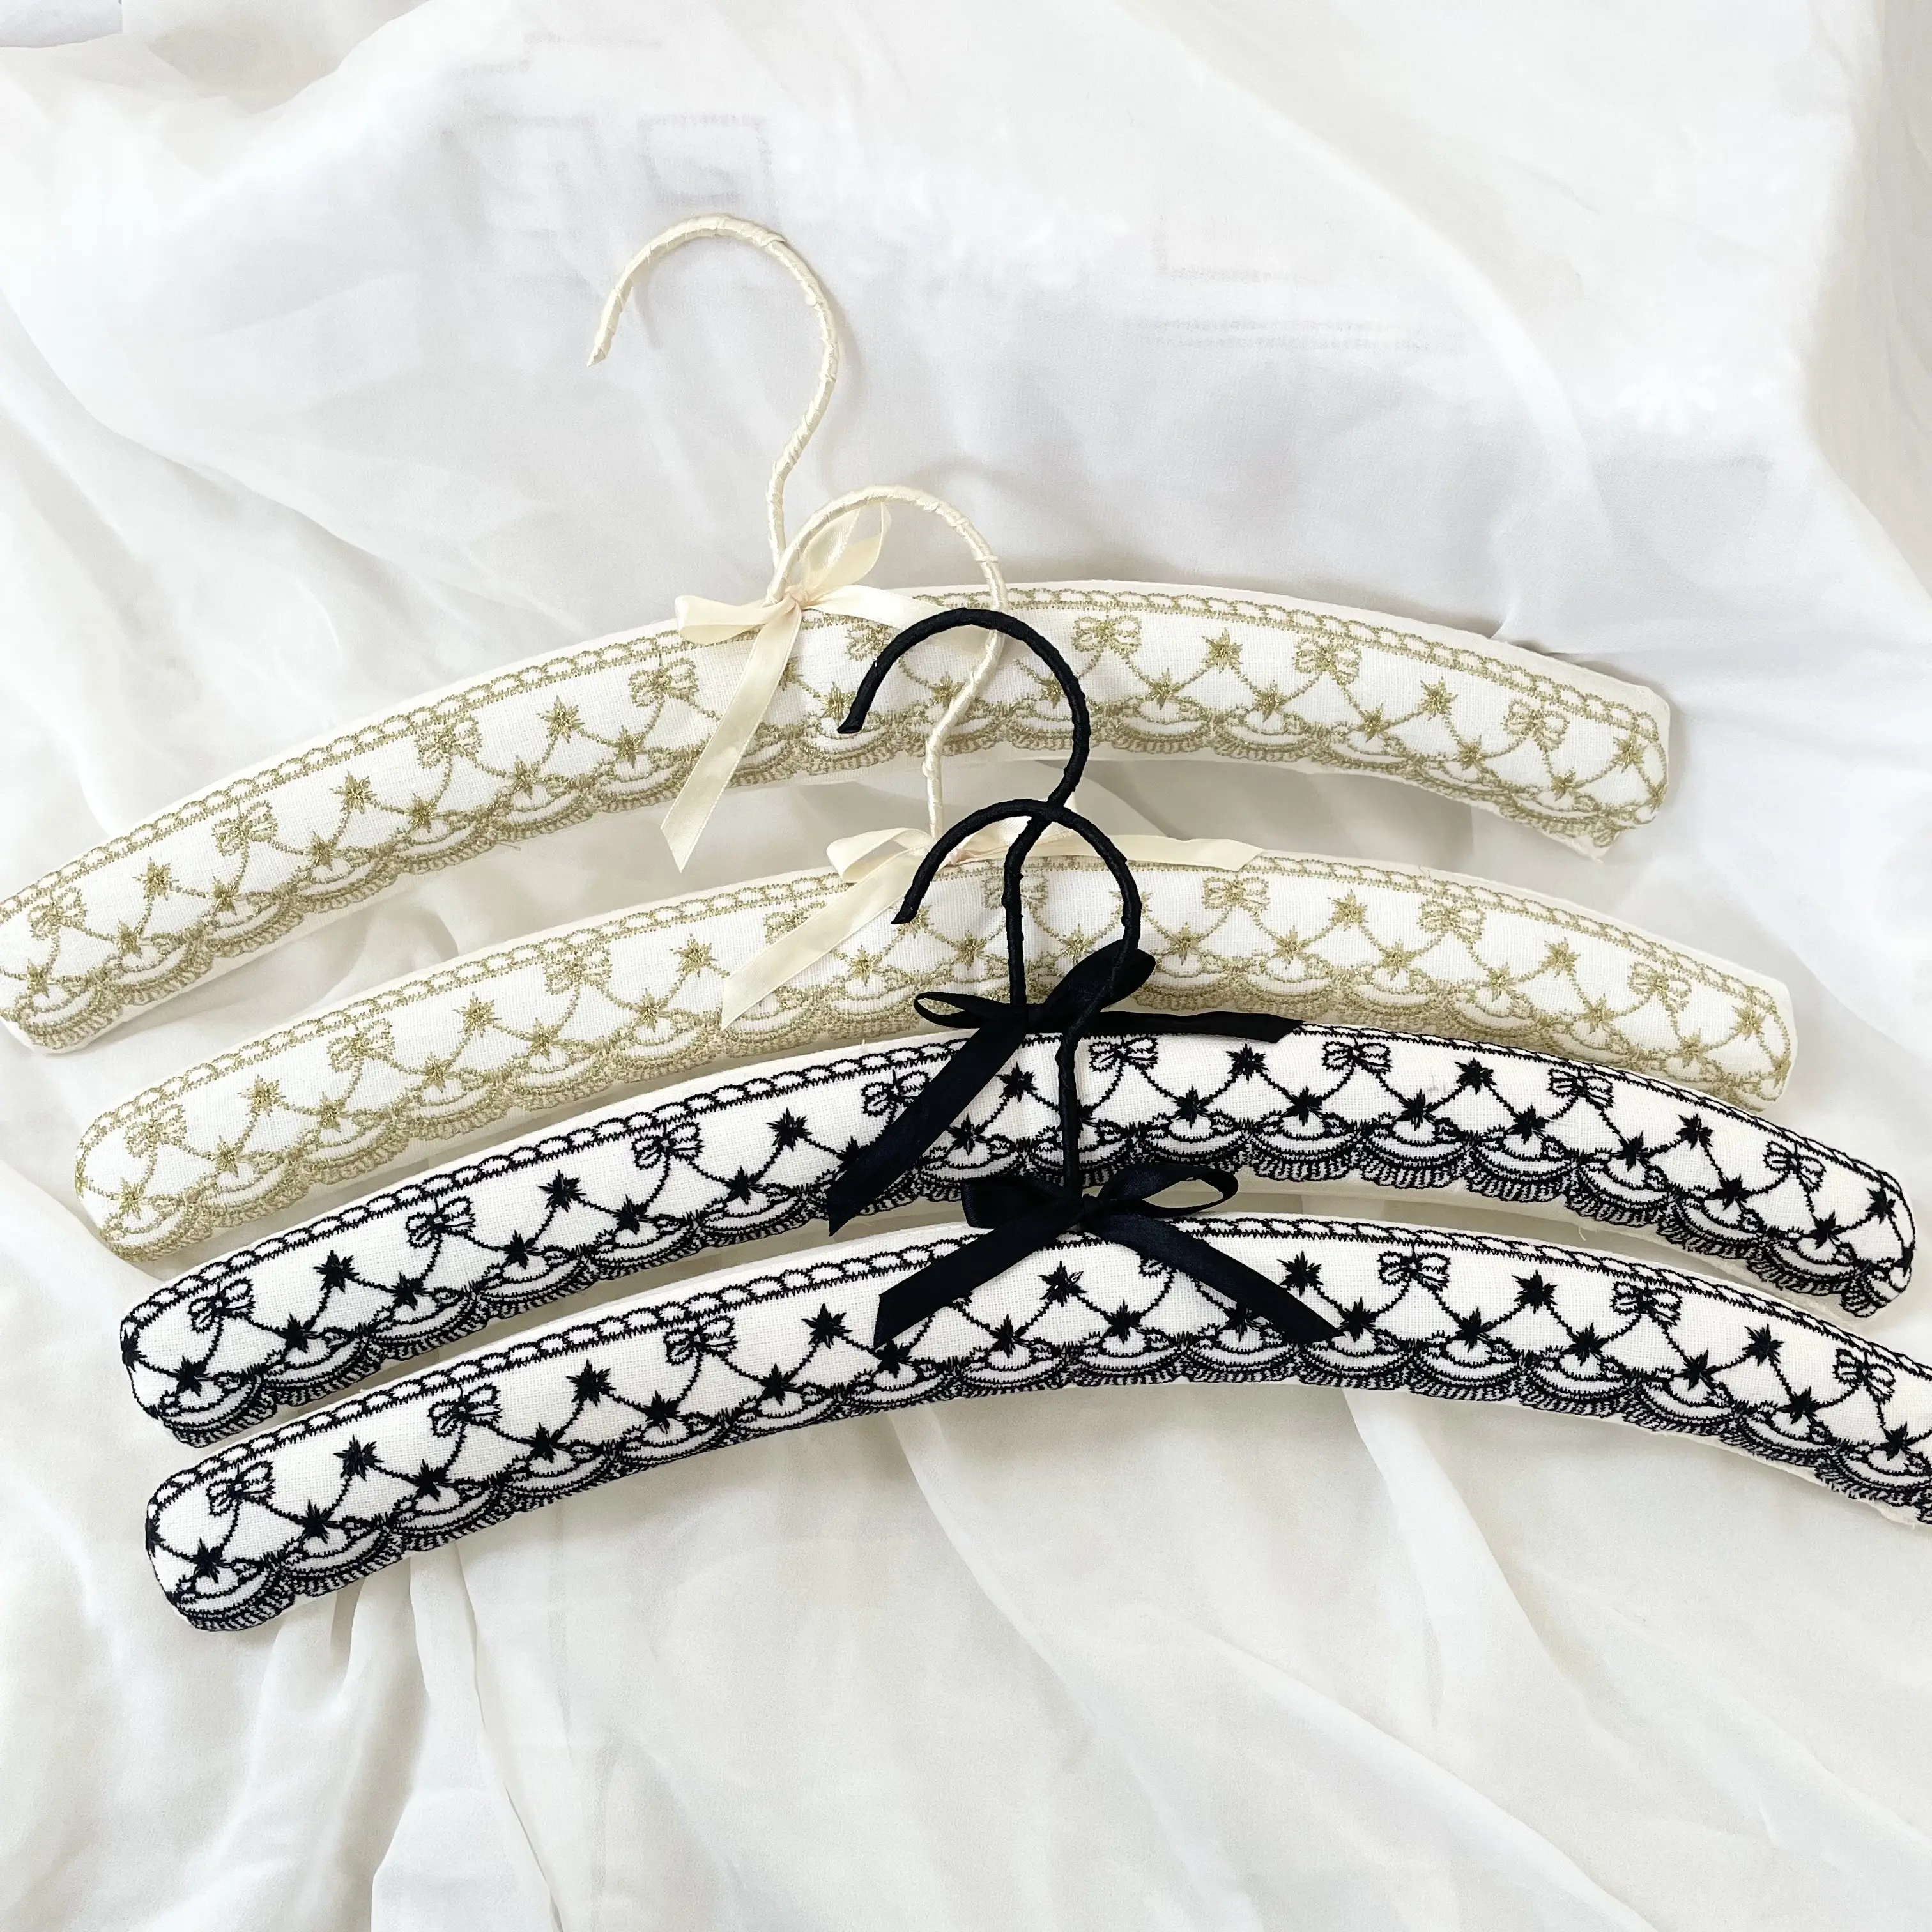 Cabides acolchoados de moda moderna estilo europeu para bordados de algodão, ganchos e cabides para casamento